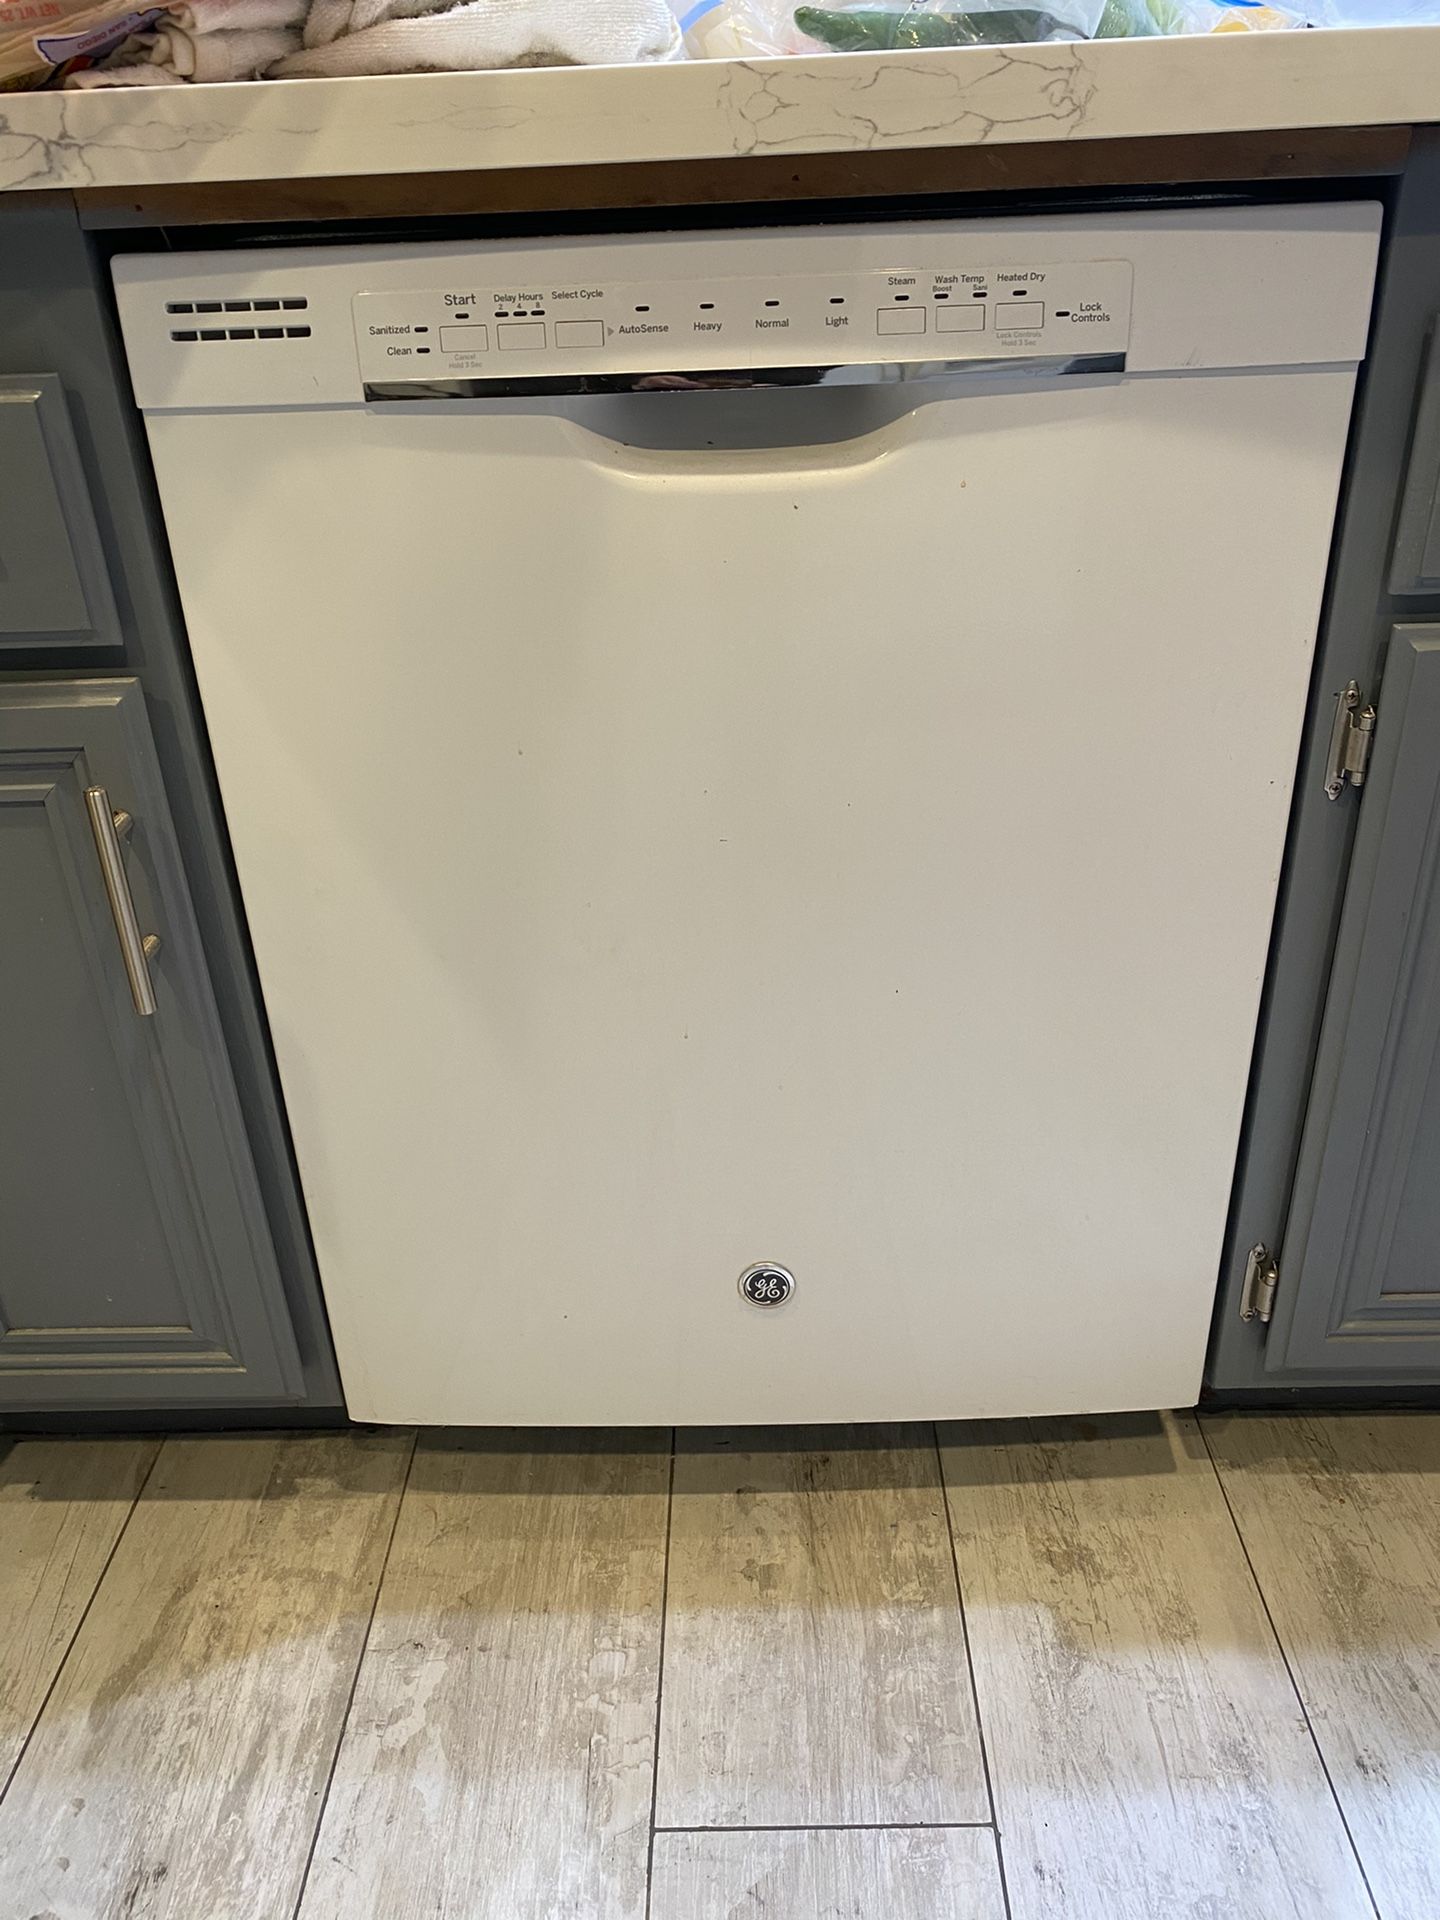 Kitchen appliances dish washer stove microwave